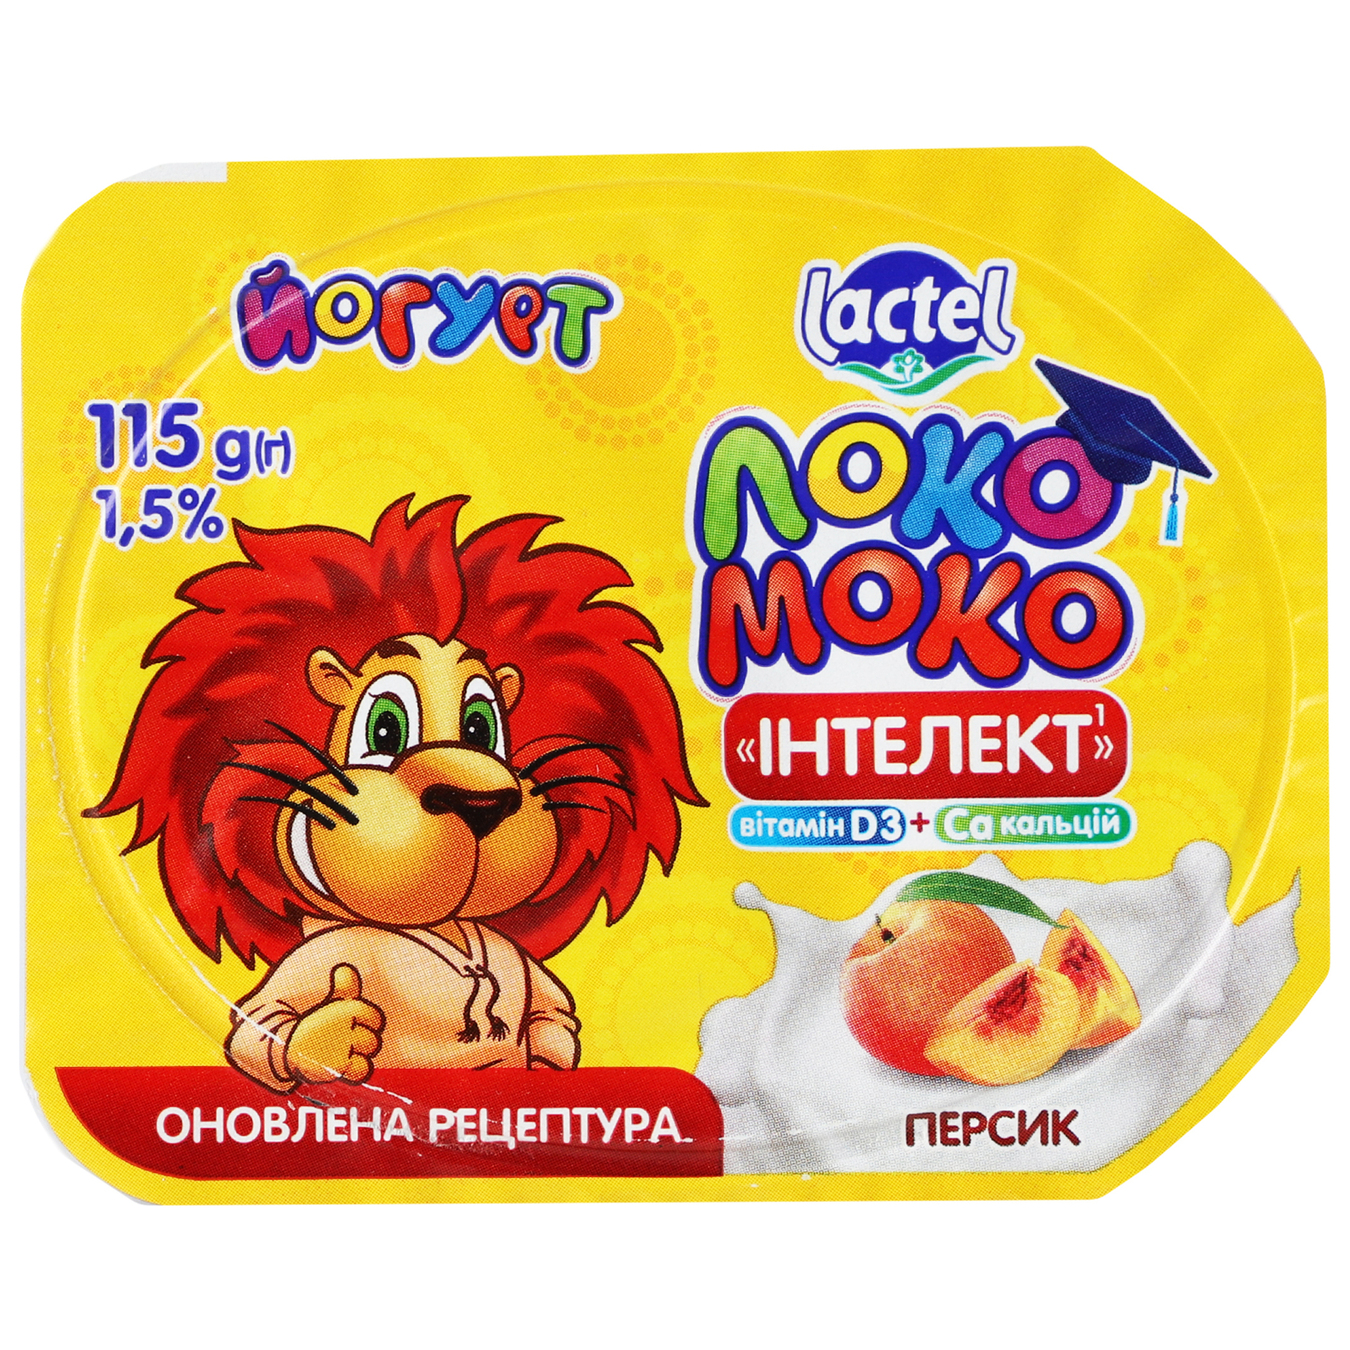 Lactel Loko Moko Peach Flavored Yogurt 1,5% 115g 4